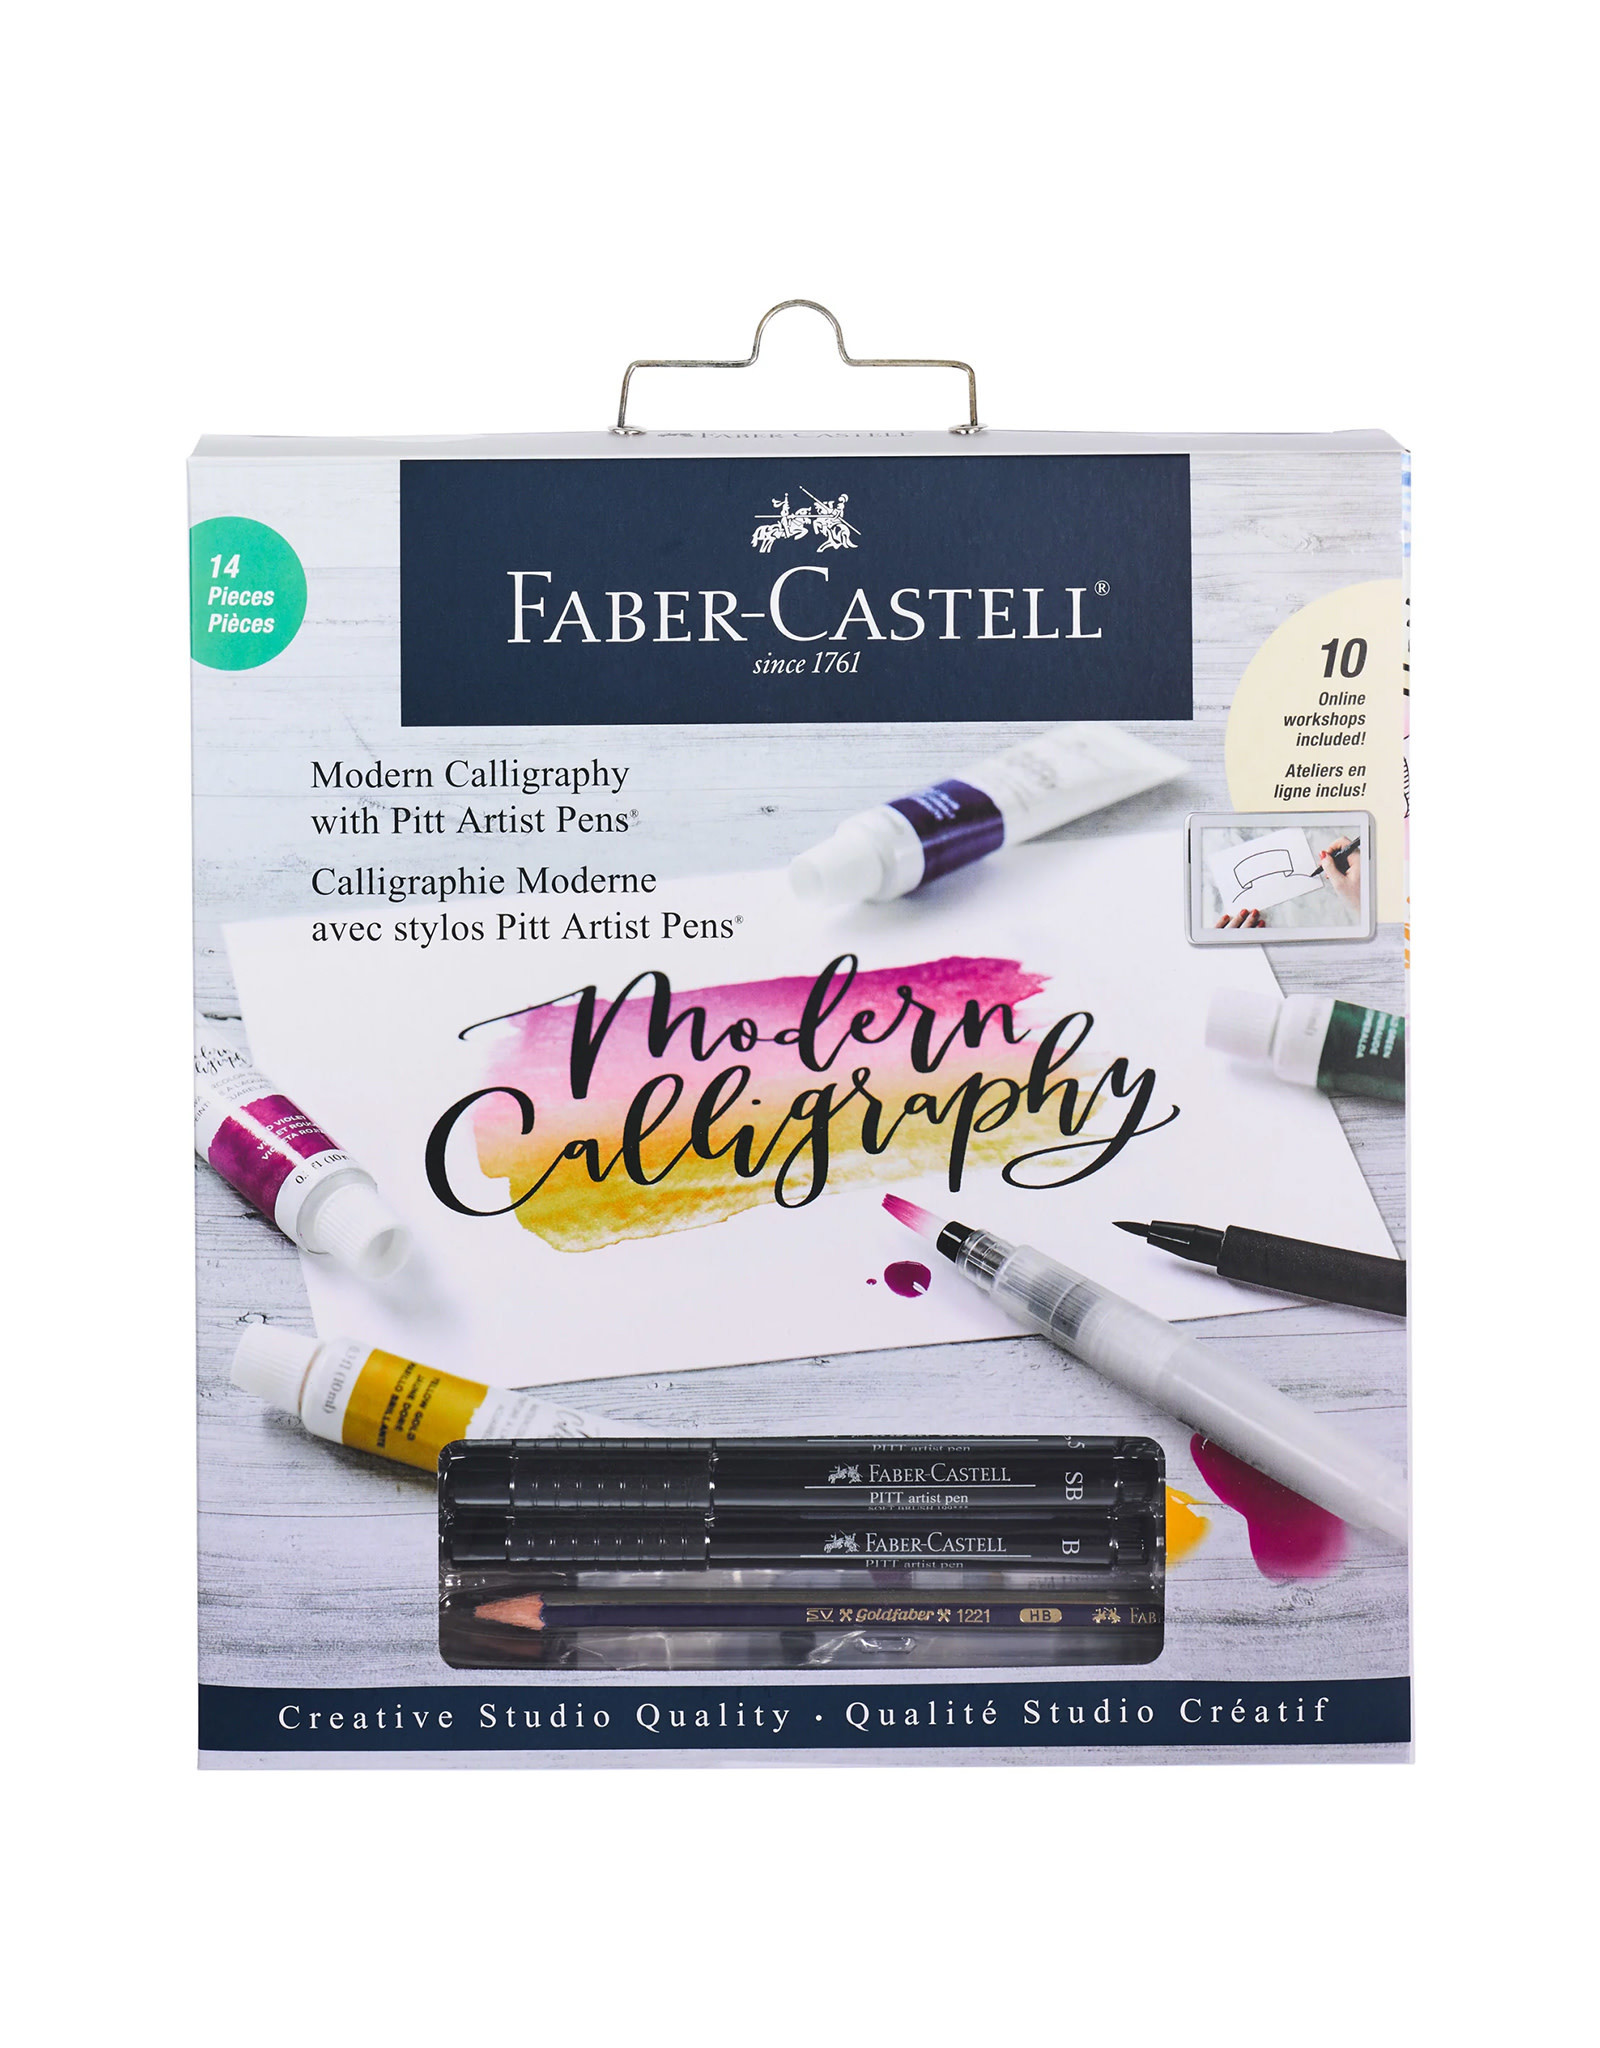 FABER-CASTELL Faber-Castell Modern Calligraphy Kit